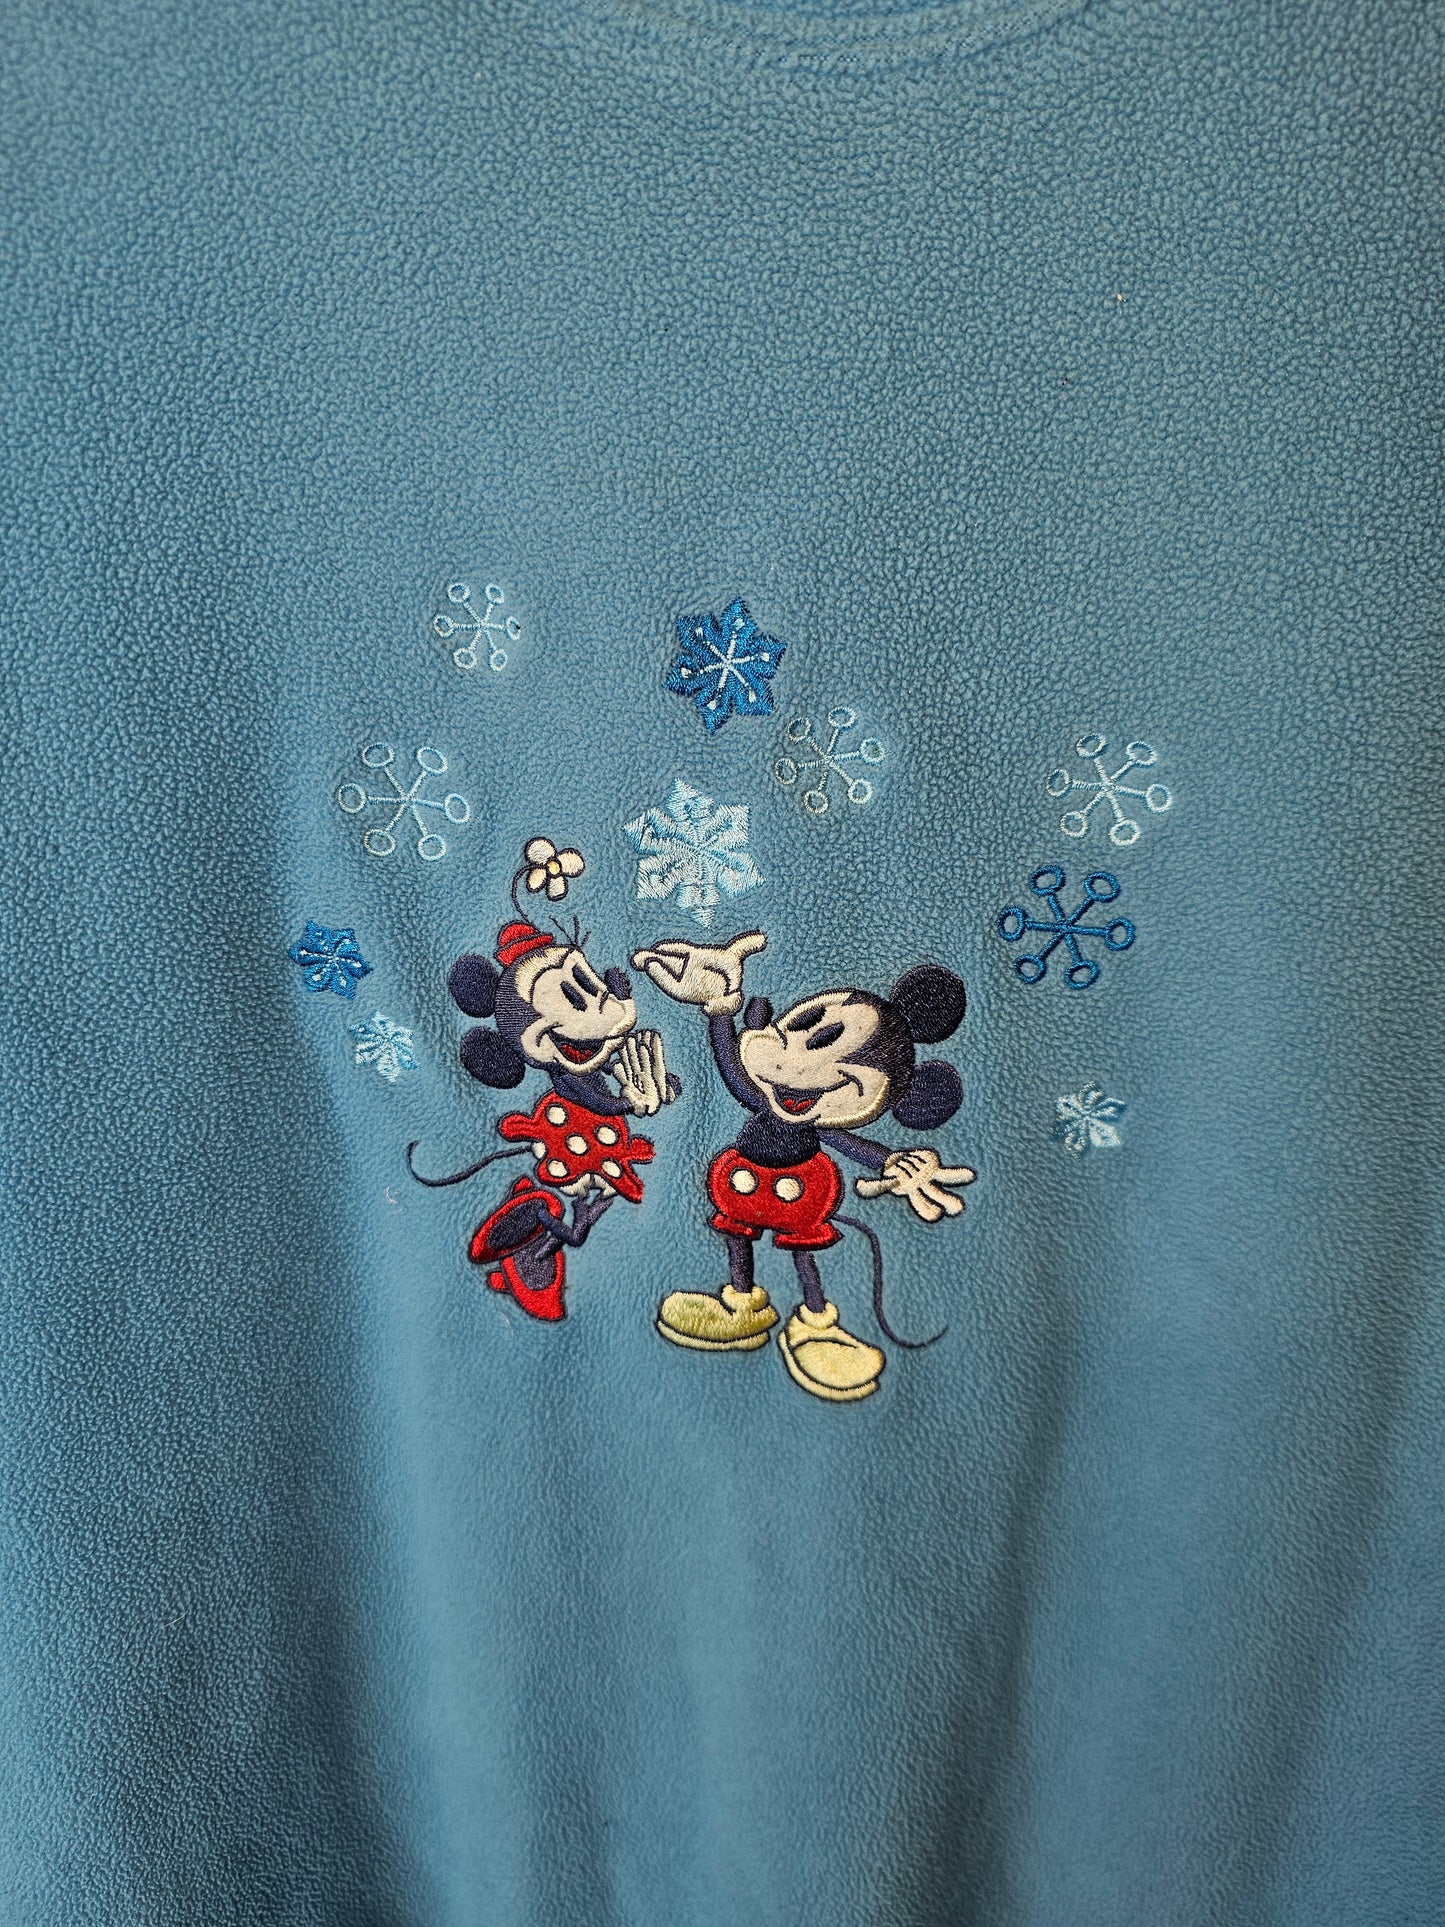 Disney Embroidered Fleece Sweater (XL)